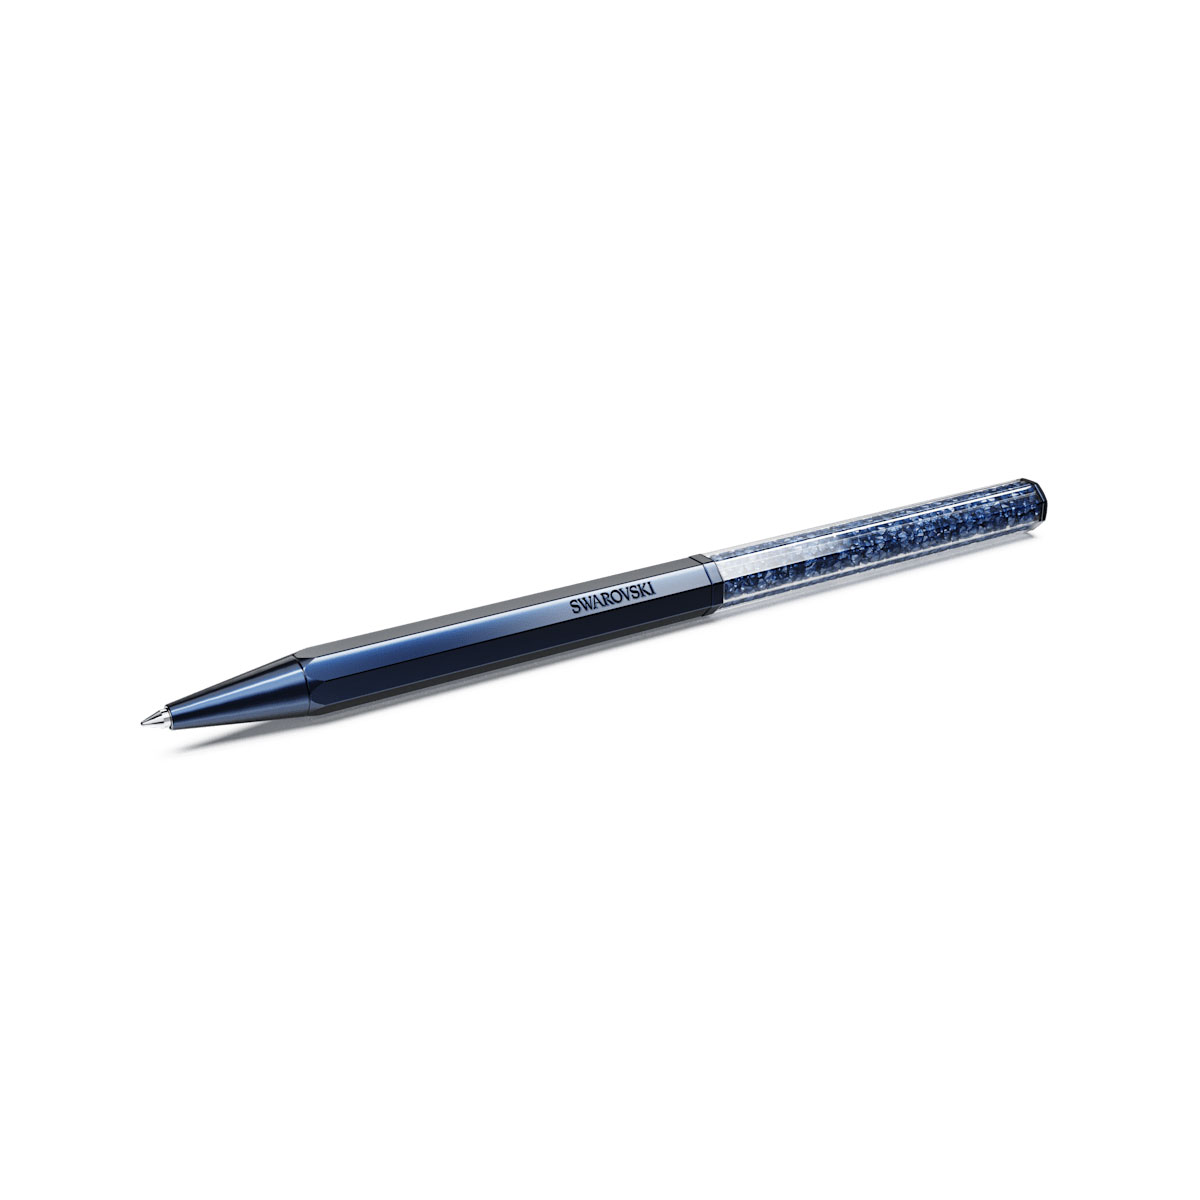 Swarovski Crystalline Ballpoint Pen Blue Lacquered